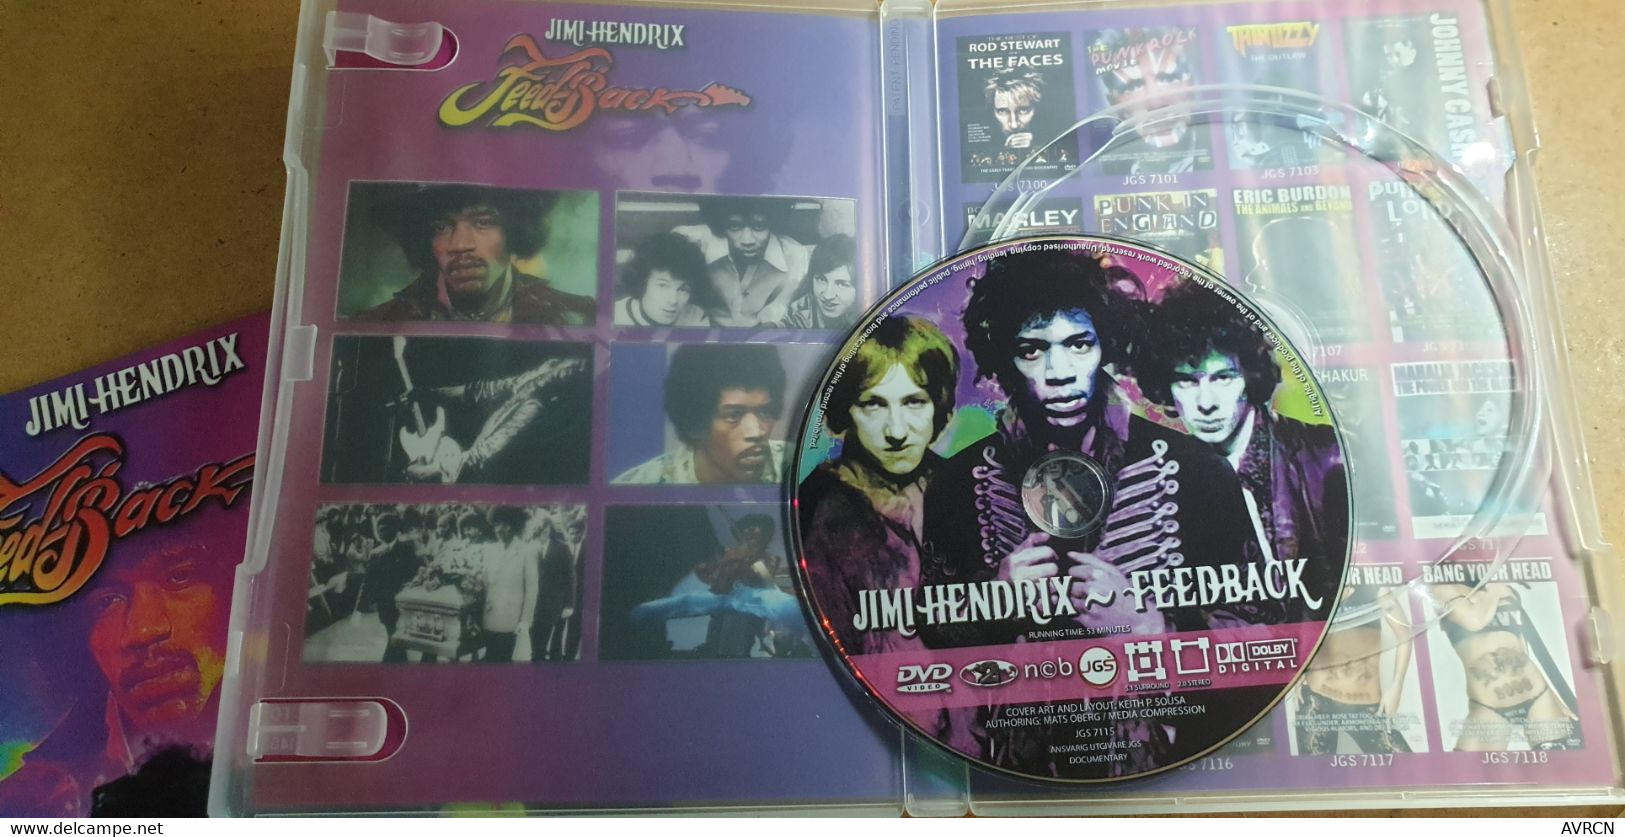 JIMI HENDRIX - FEEDBACK - DVD « NCB-JGS 7115 ». - DVD Musicali